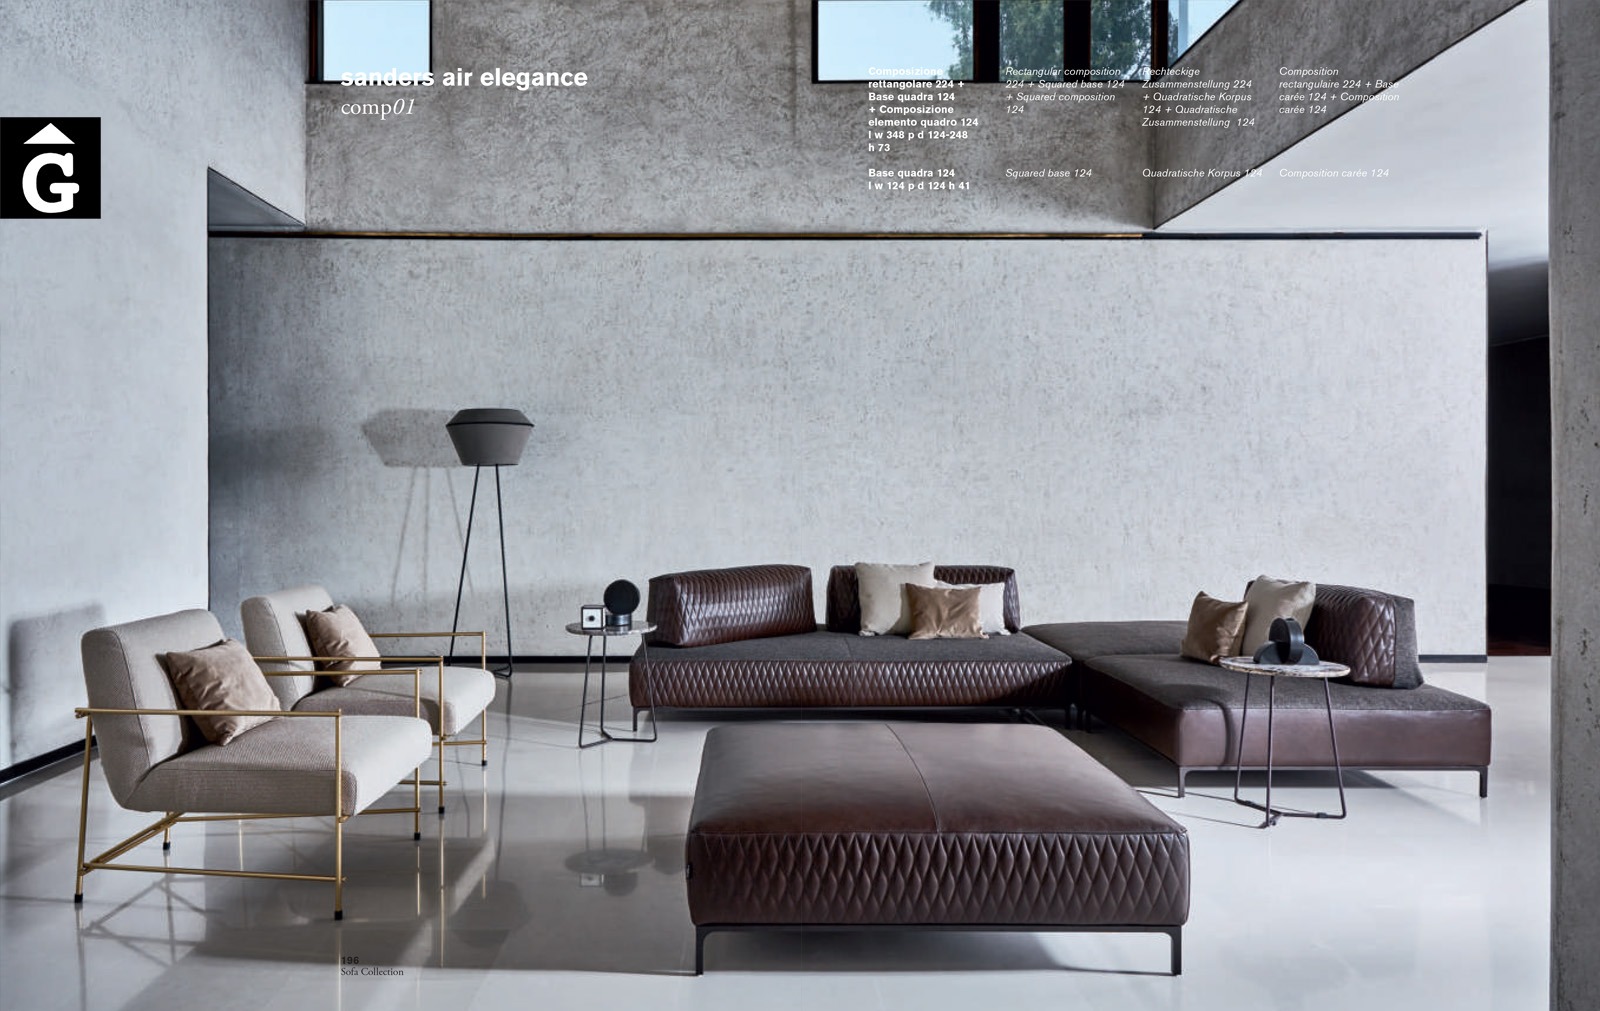 Sofà Sanders air elegance sofa – Ditre Italia Sofas disseny i qualitat alta by mobles Gifreu